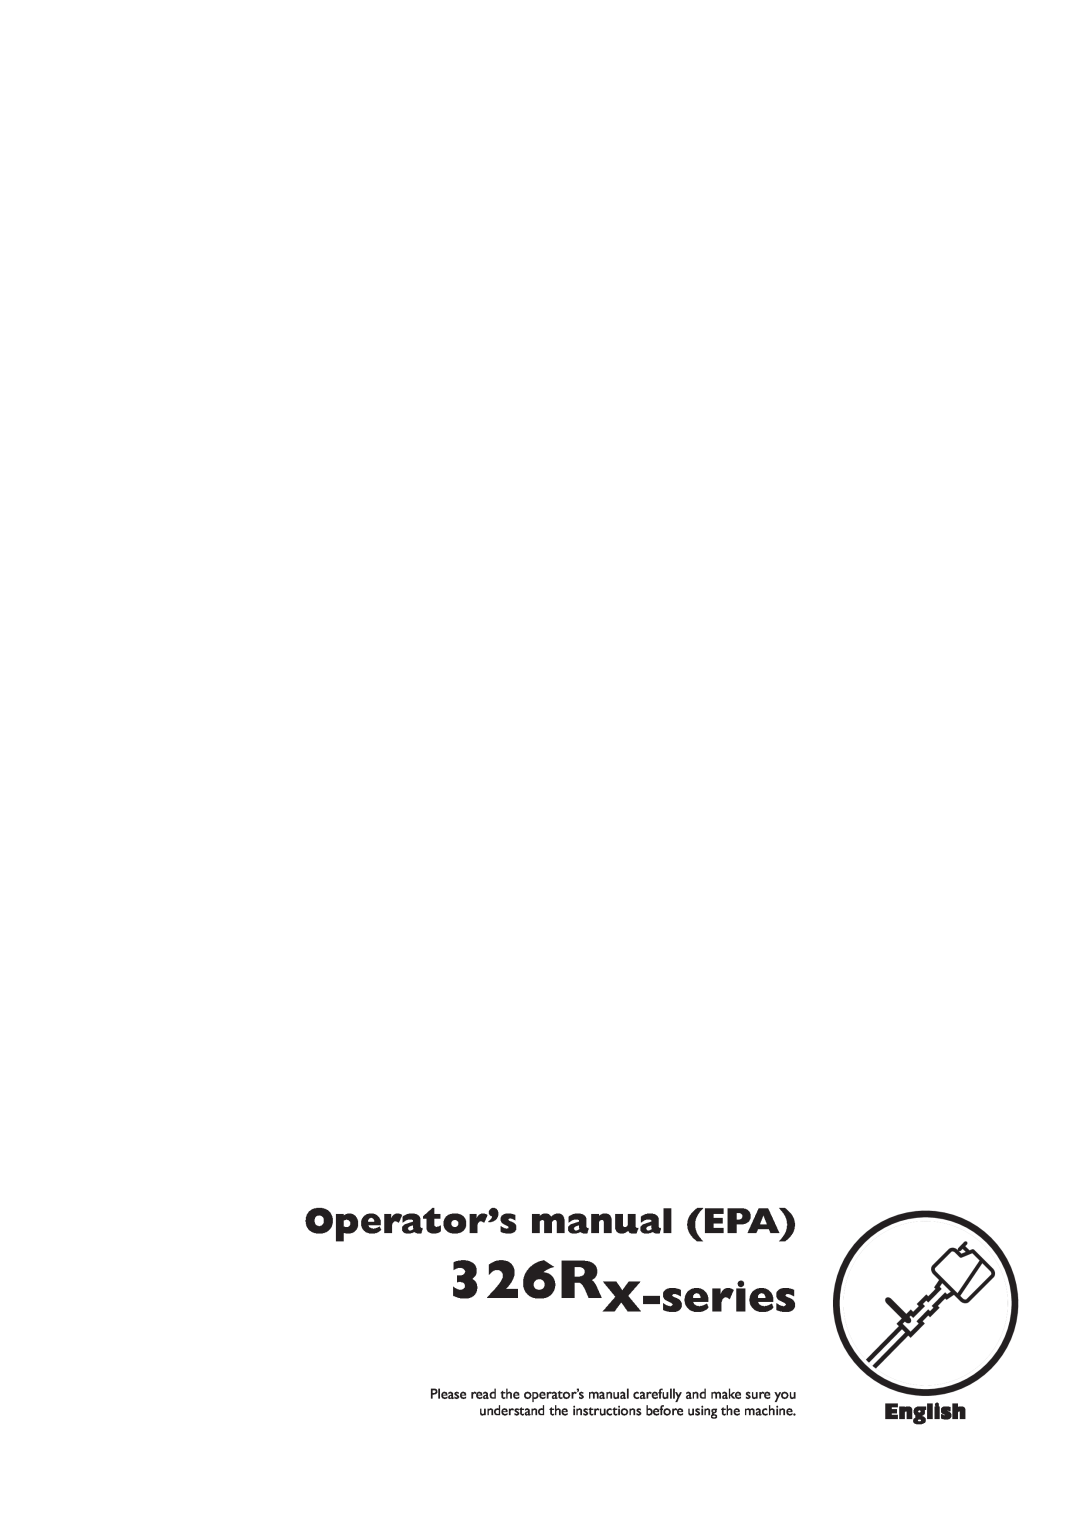 Husqvarna manual 326RX-series, Operator’s manual EPA, English 